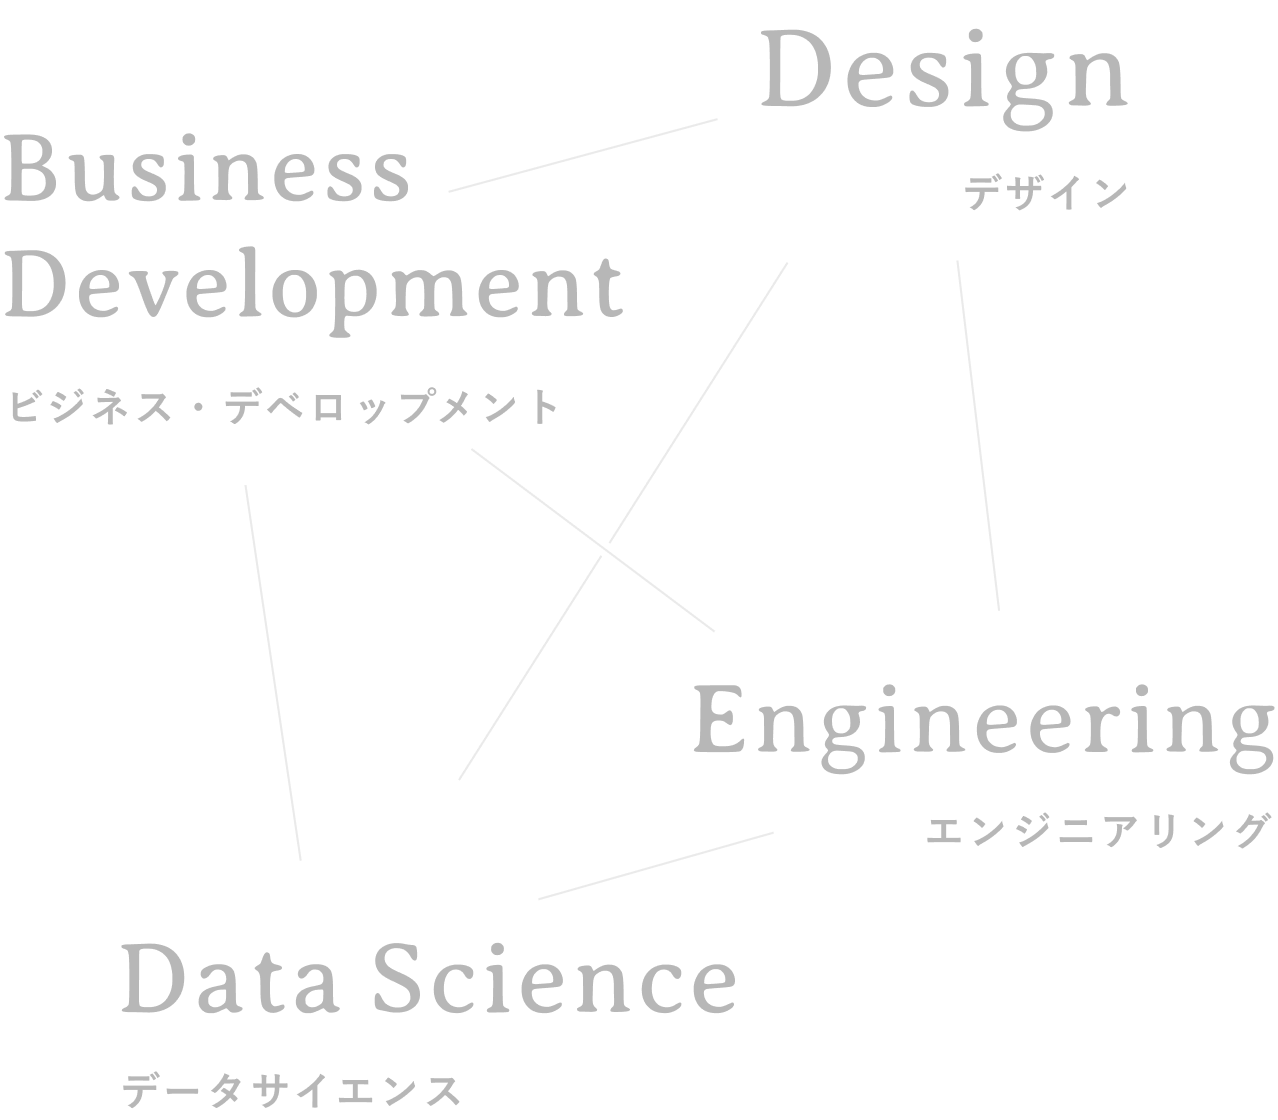 Design, Business Development, Engineering, Data Science